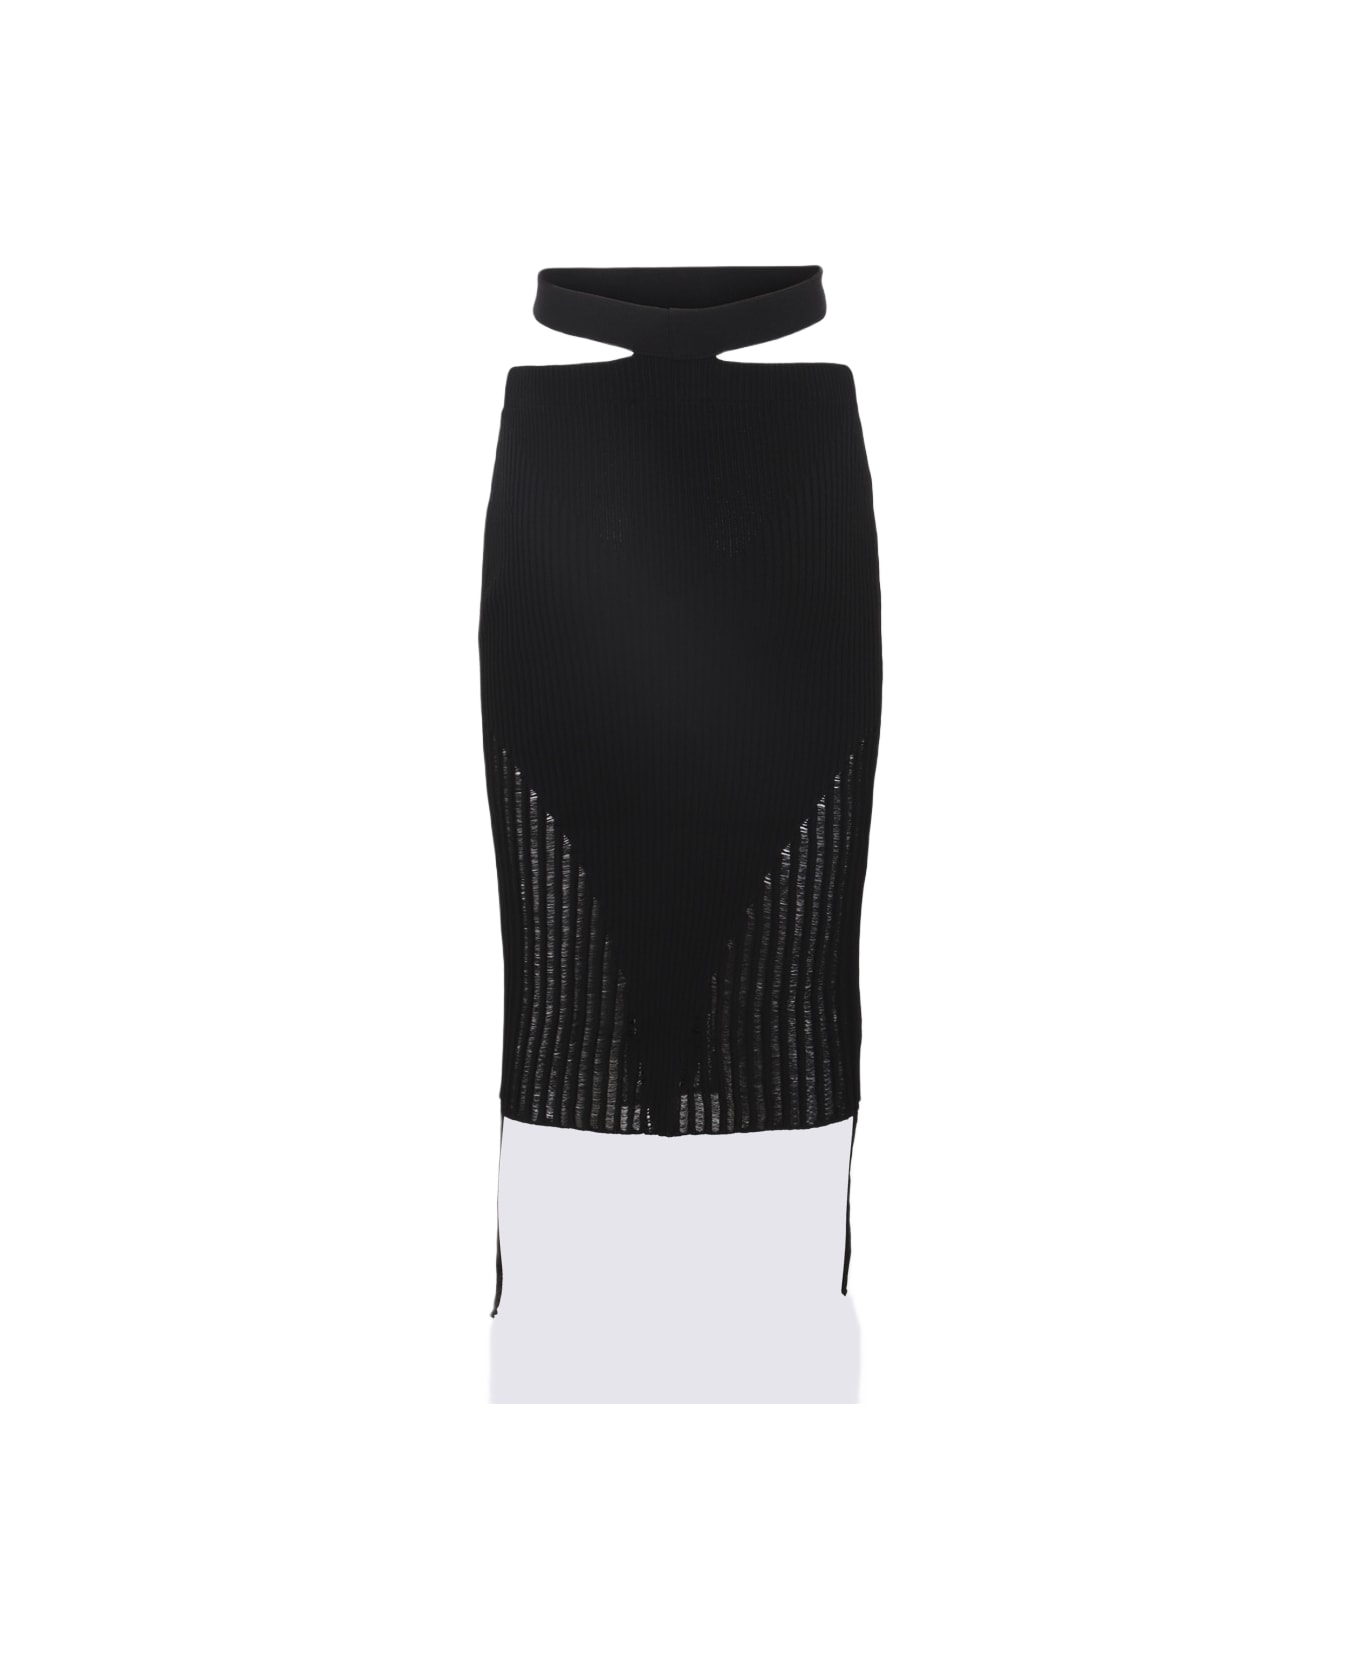 ANDREĀDAMO Black Viscose Blend Skirt - Black スカート